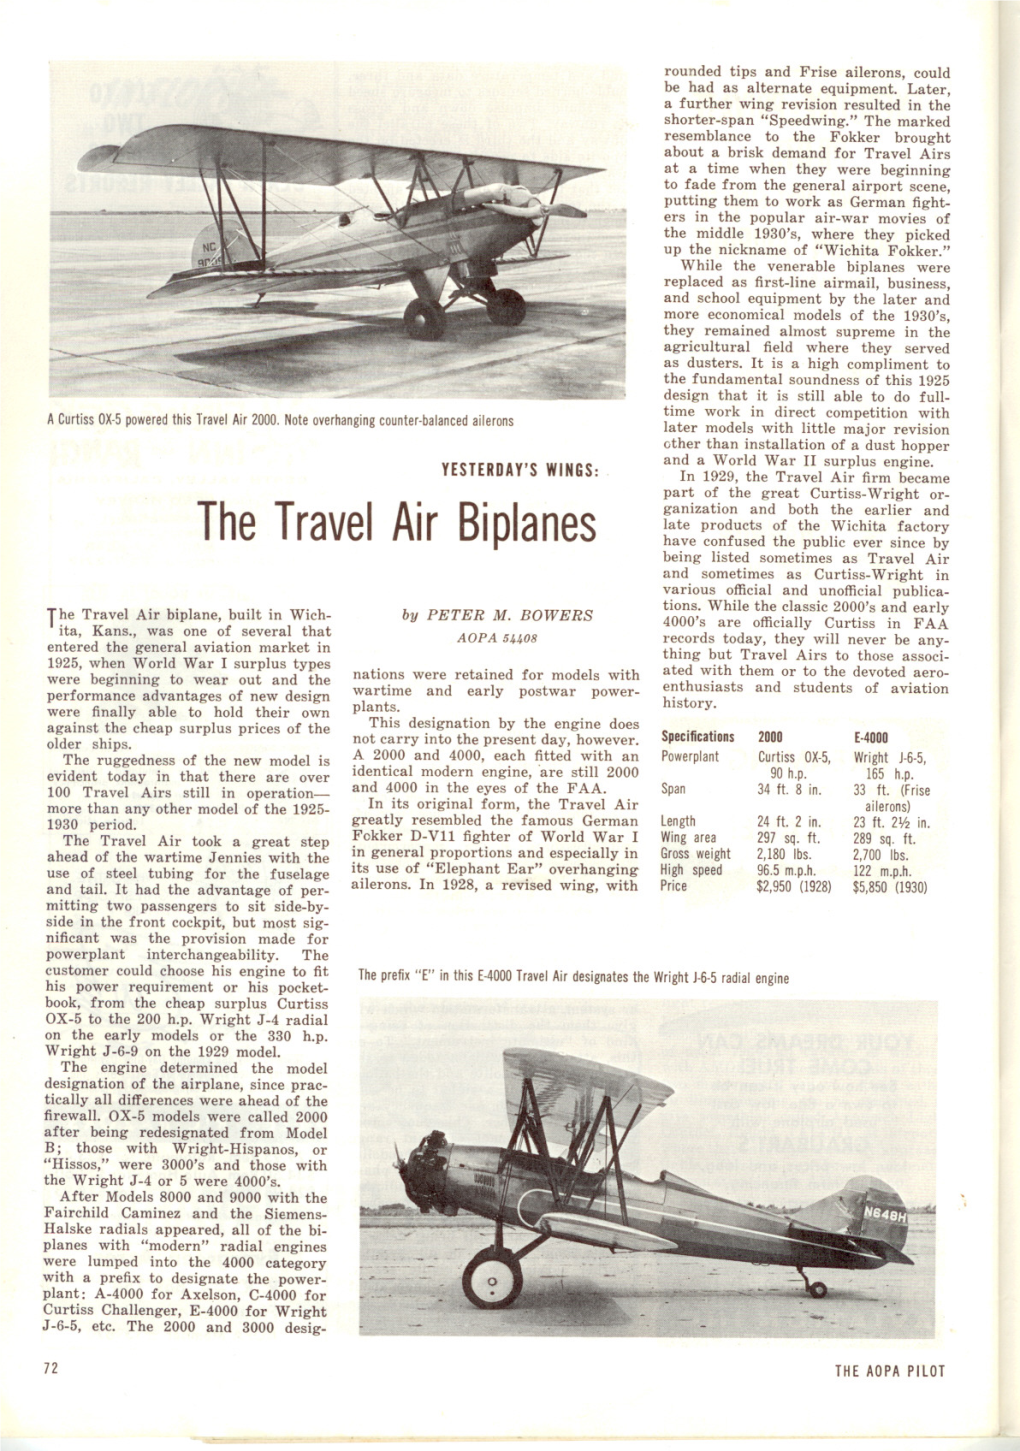 The Travel Air Biplanes